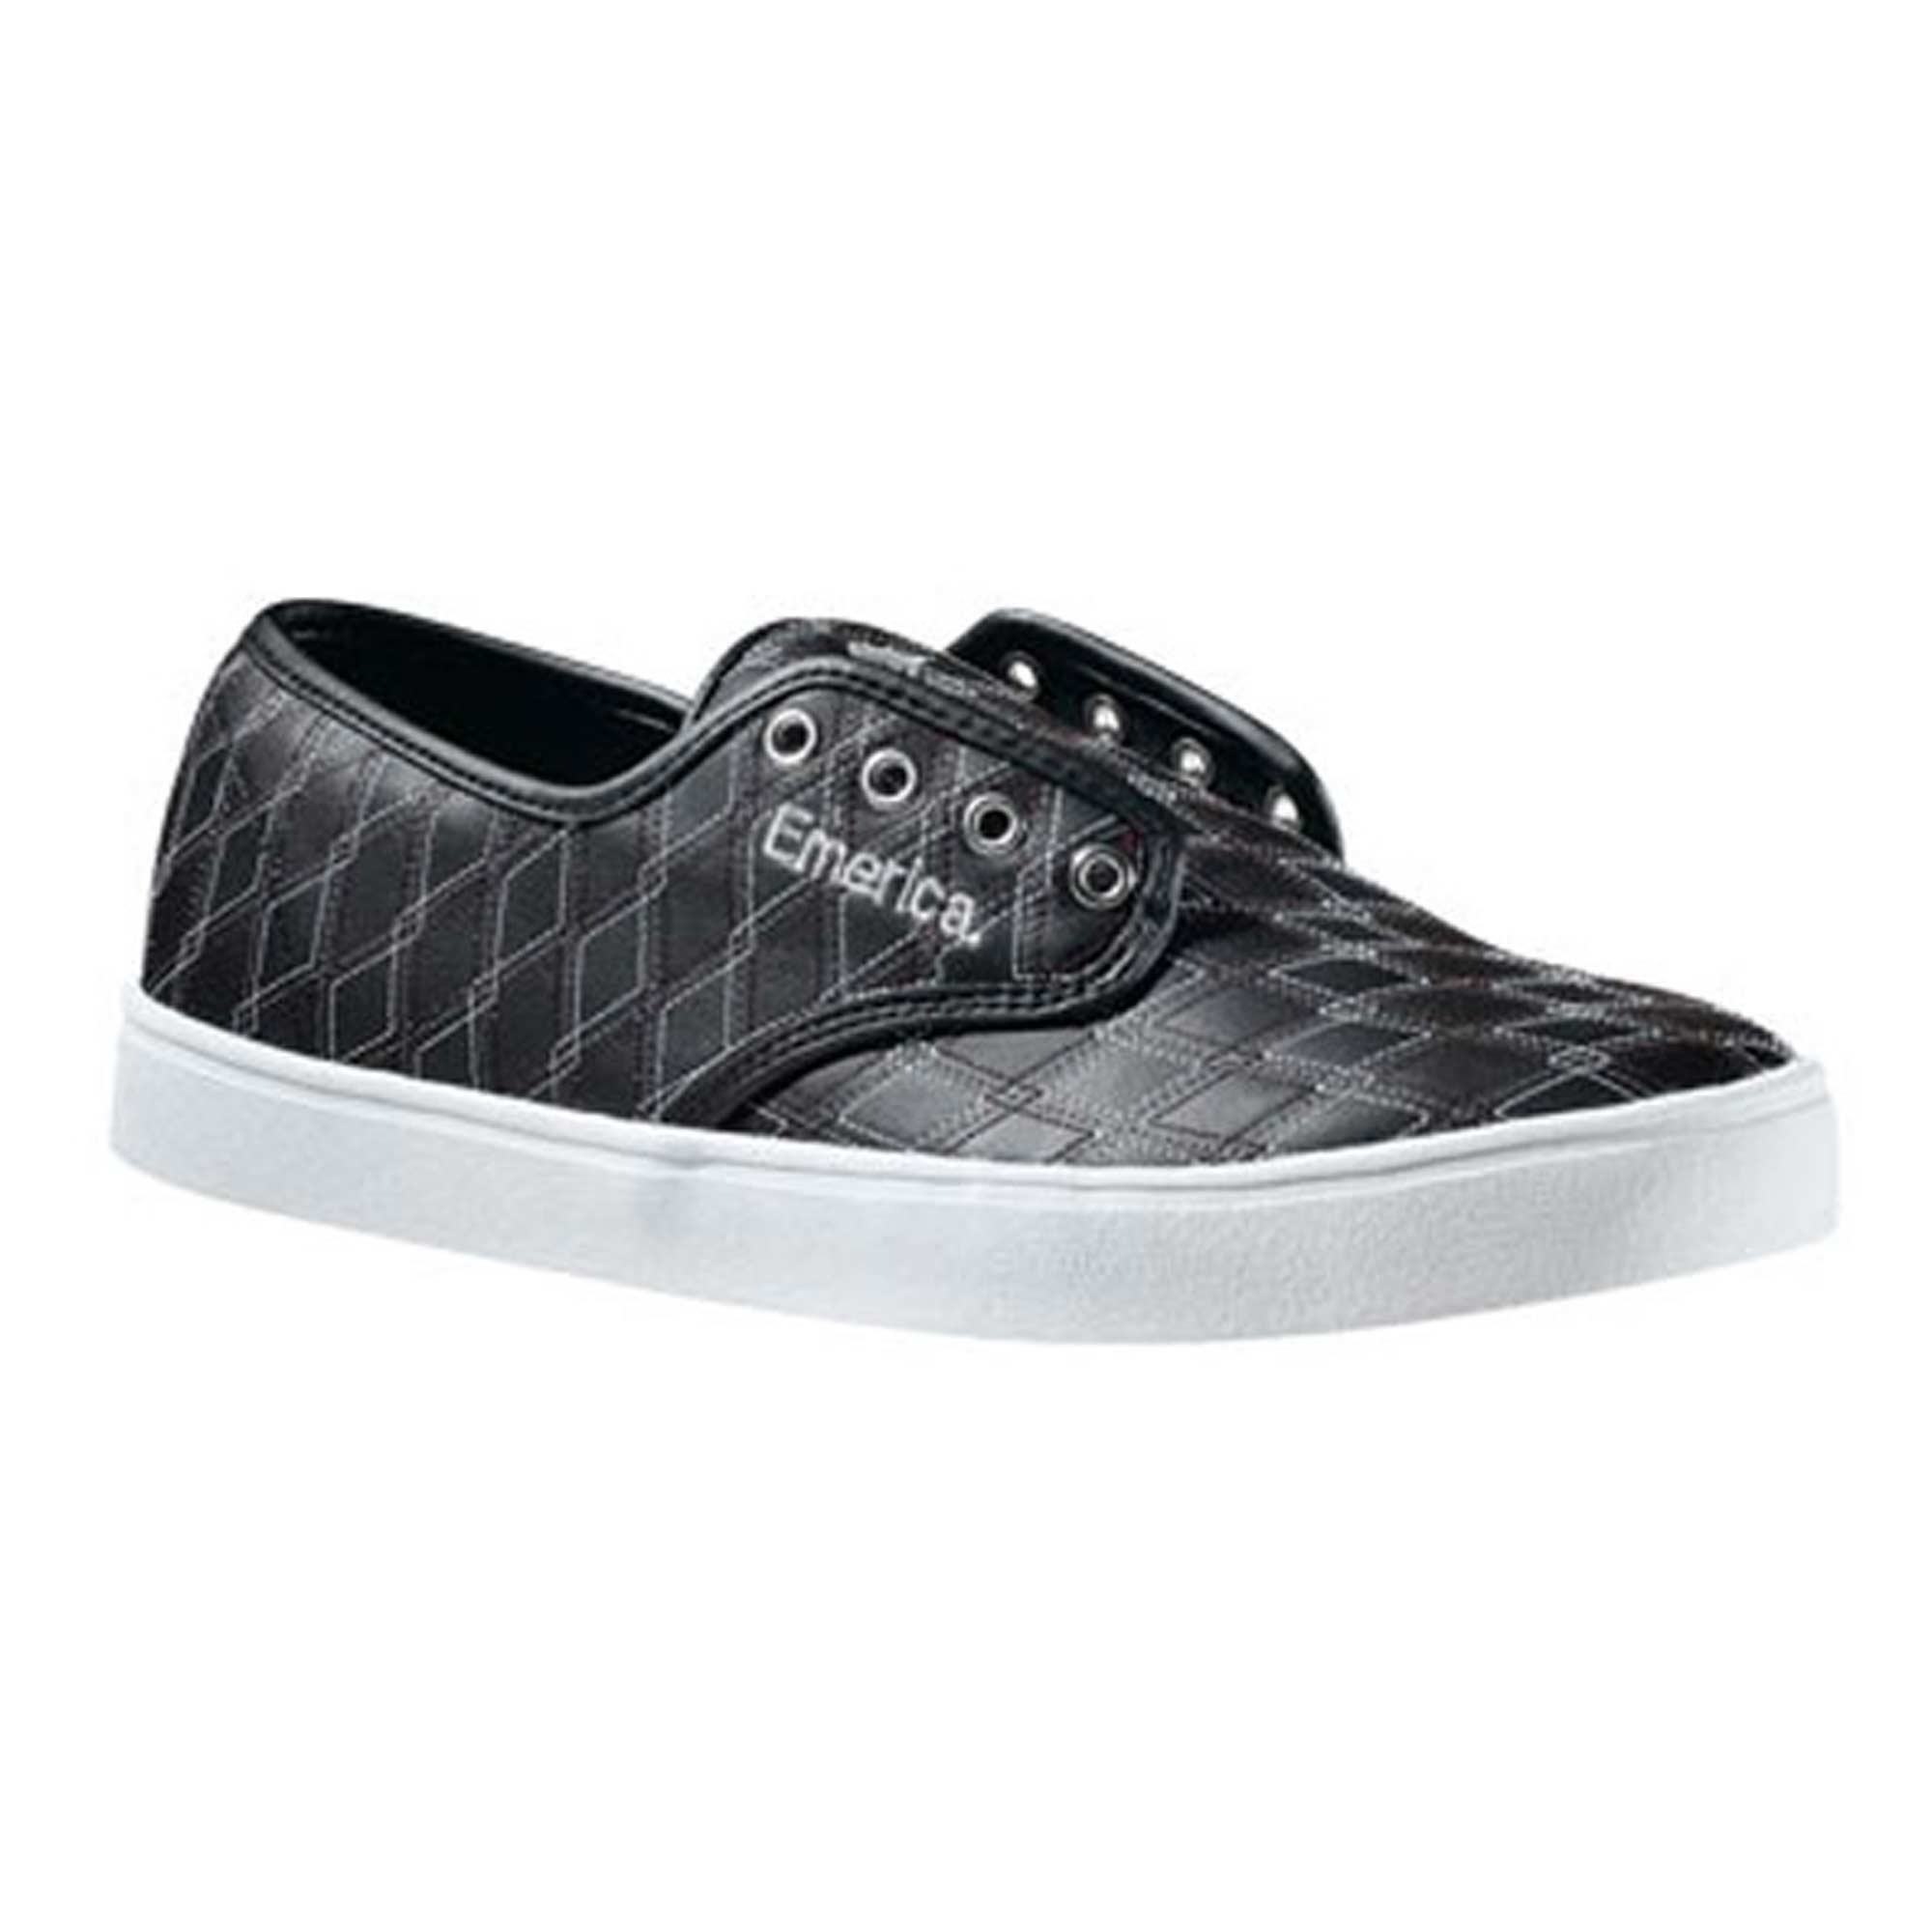 EMERICA Shoe LACED black/white/black schwarz